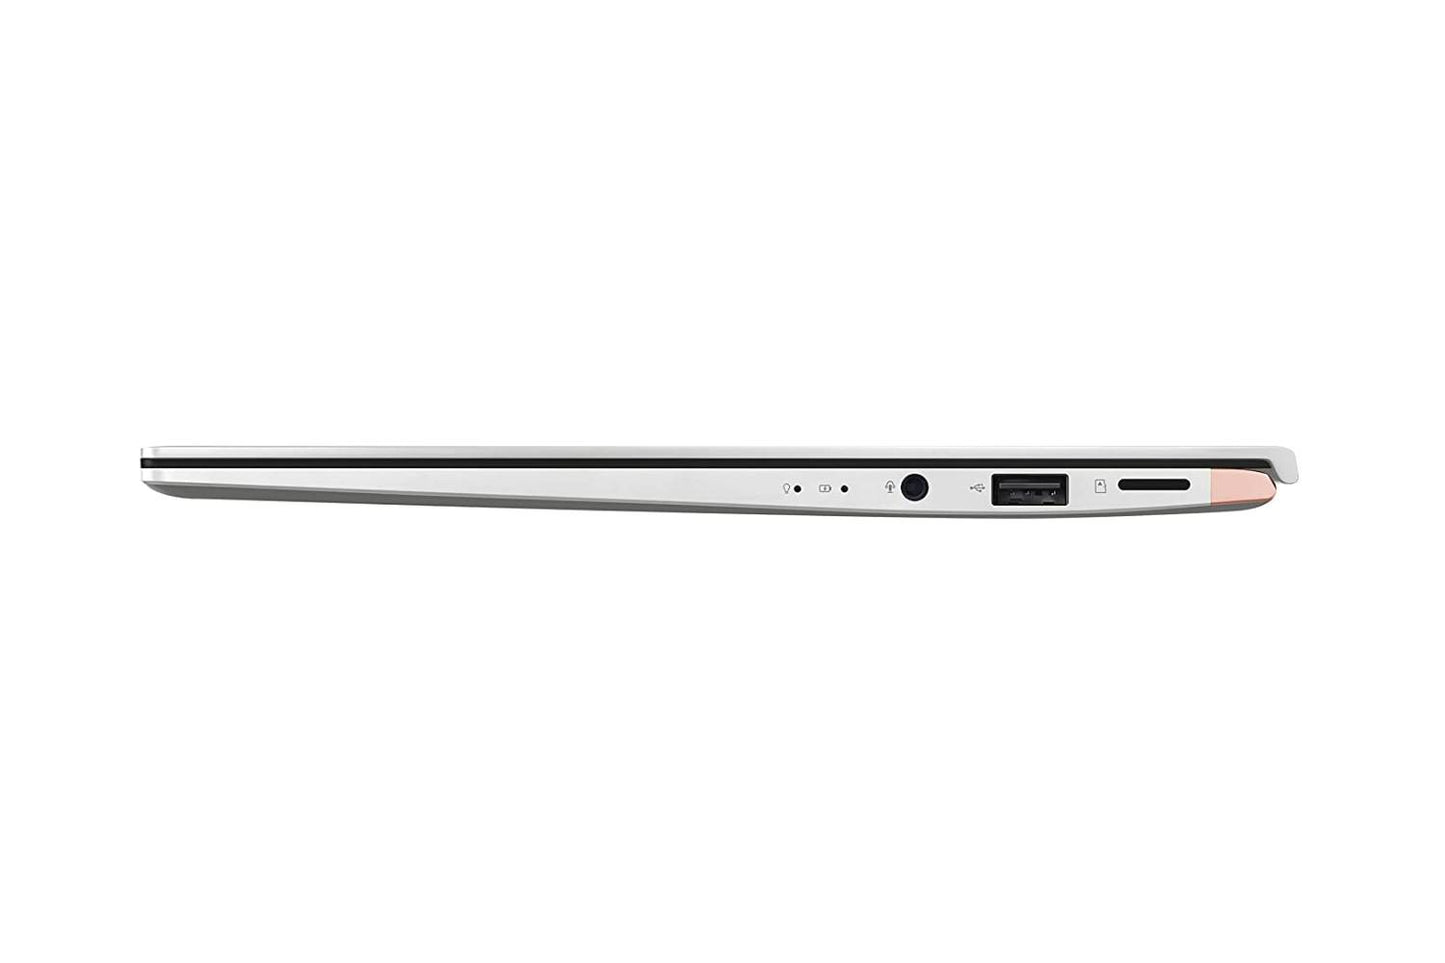 ASUS ZenBook 14 UX433FA-A5822TS Intel Core i5 10th Gen 14-inch FHD Thin & Light Laptop